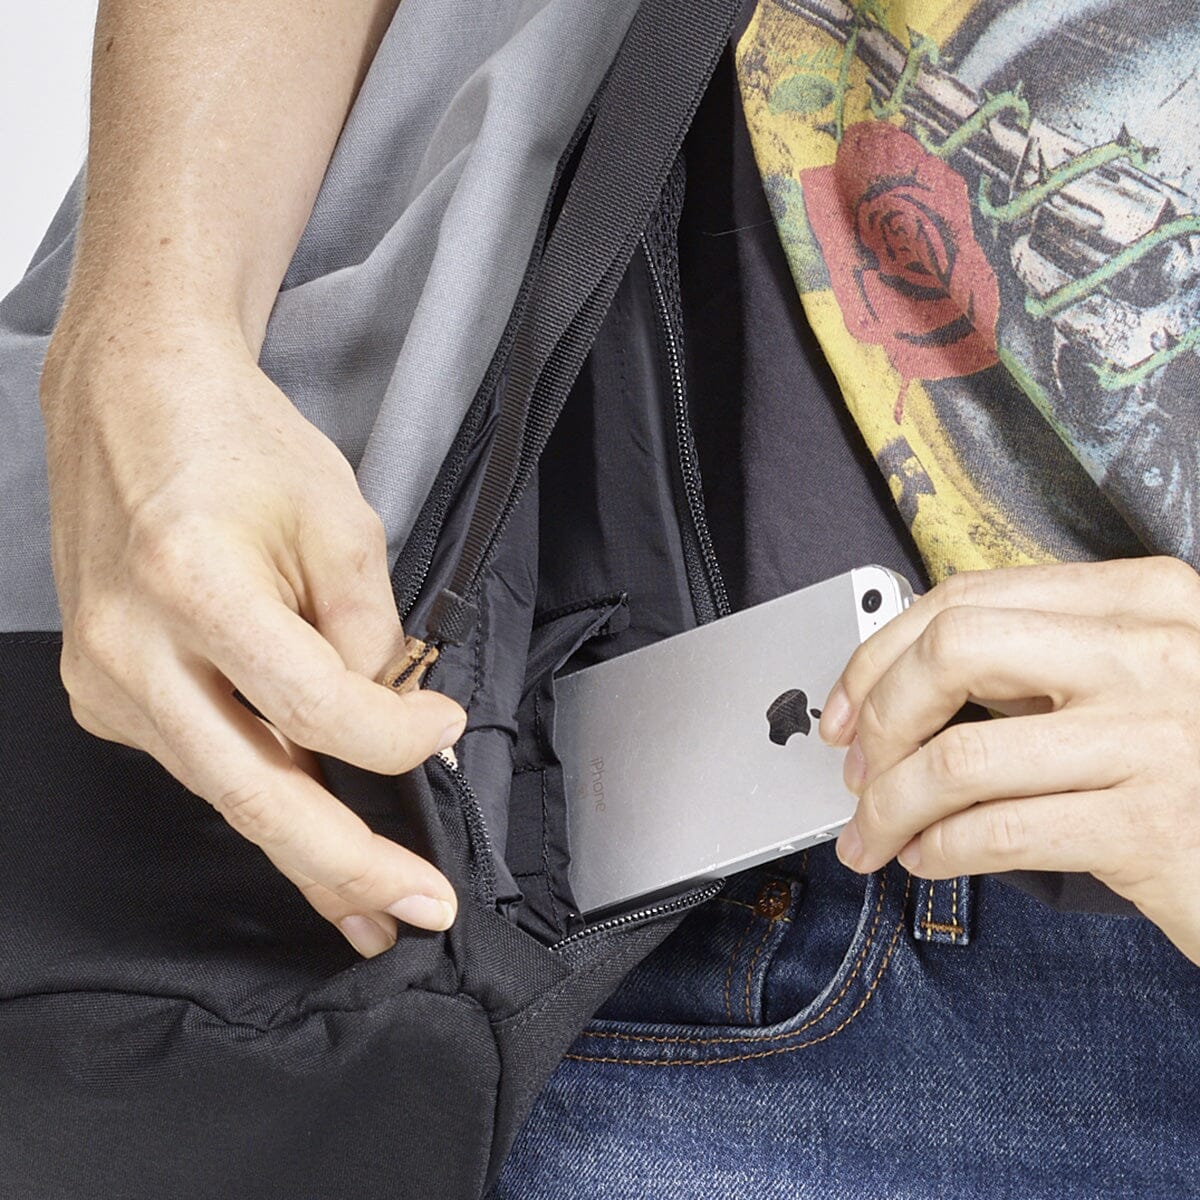 secret anti theft side pocket to store a smartphone, wallet, passport